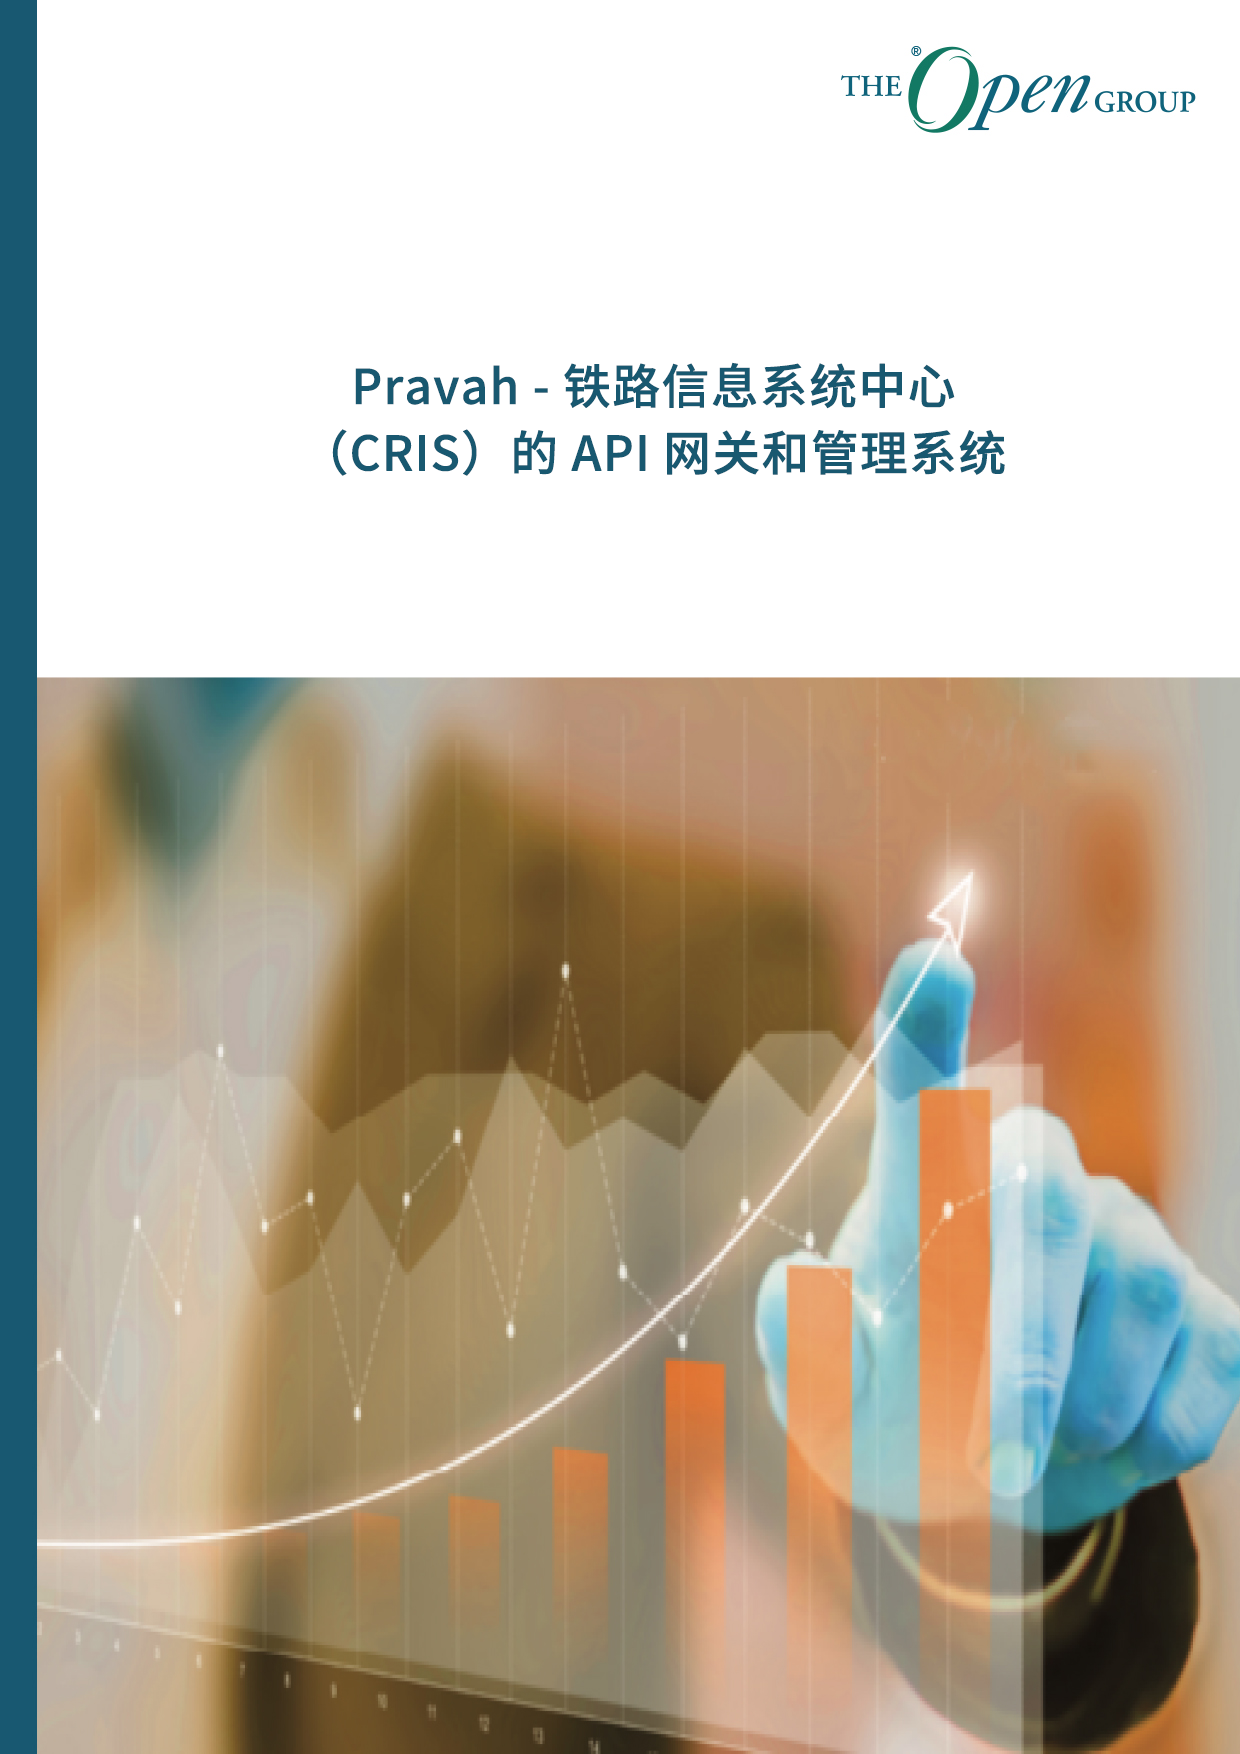 Pravah - 铁路信息系统中心（CRIS）的 API 网关和管理系统